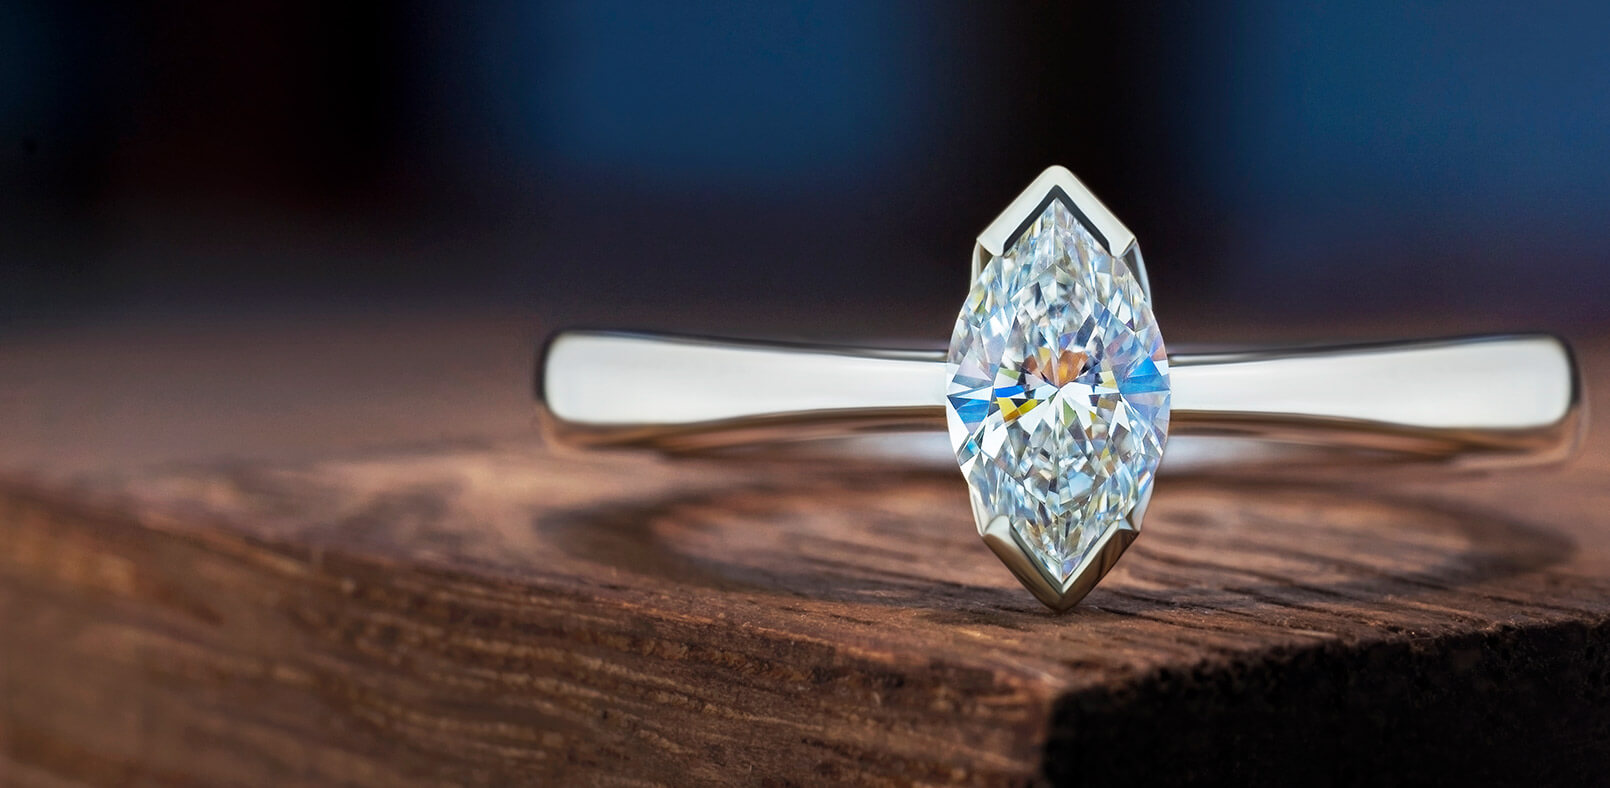 Gallery of Diamond Engagement Rings